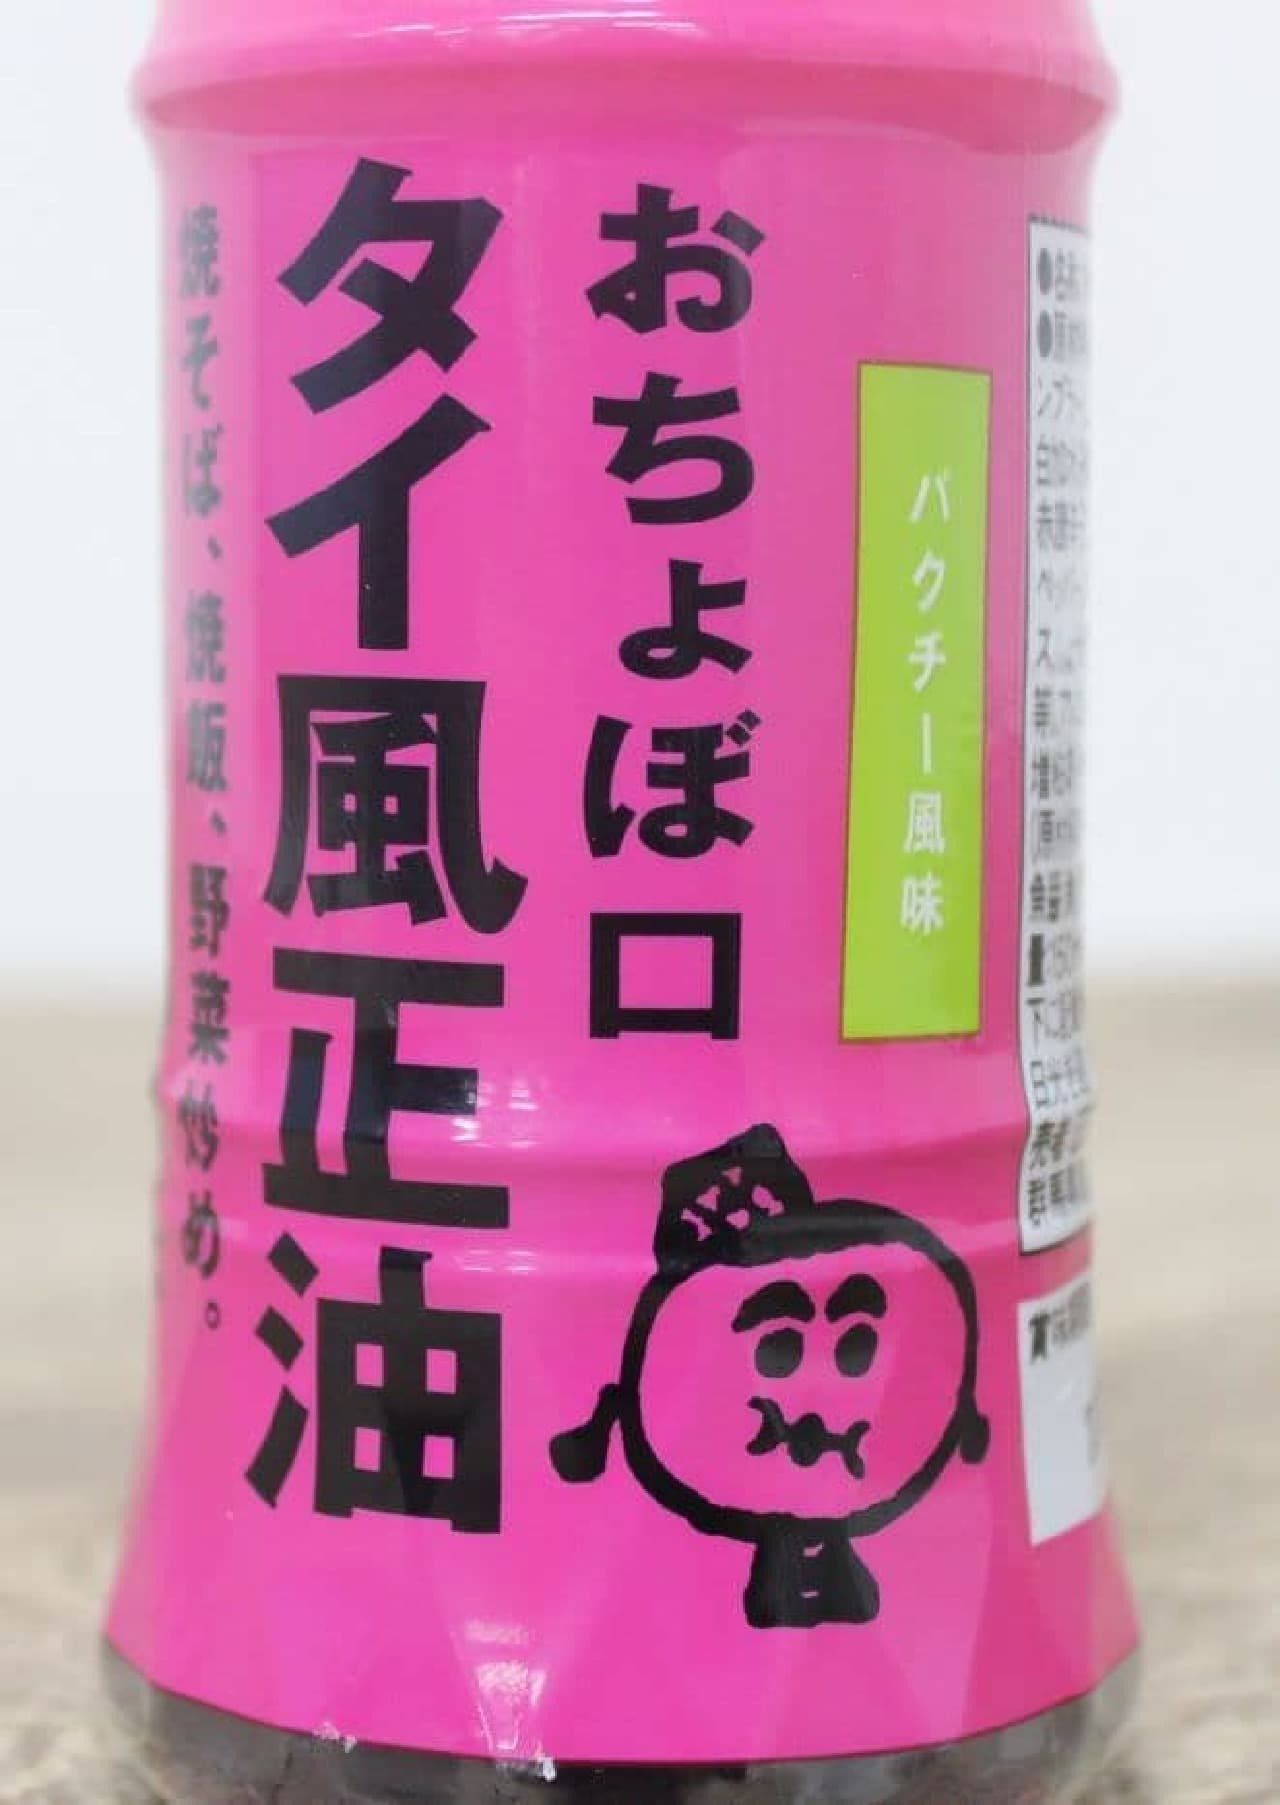 The "Ochoboguchi Series" is a product sold by Shoda Shoyu, a long-established seasoning maker in Gunma Prefecture.